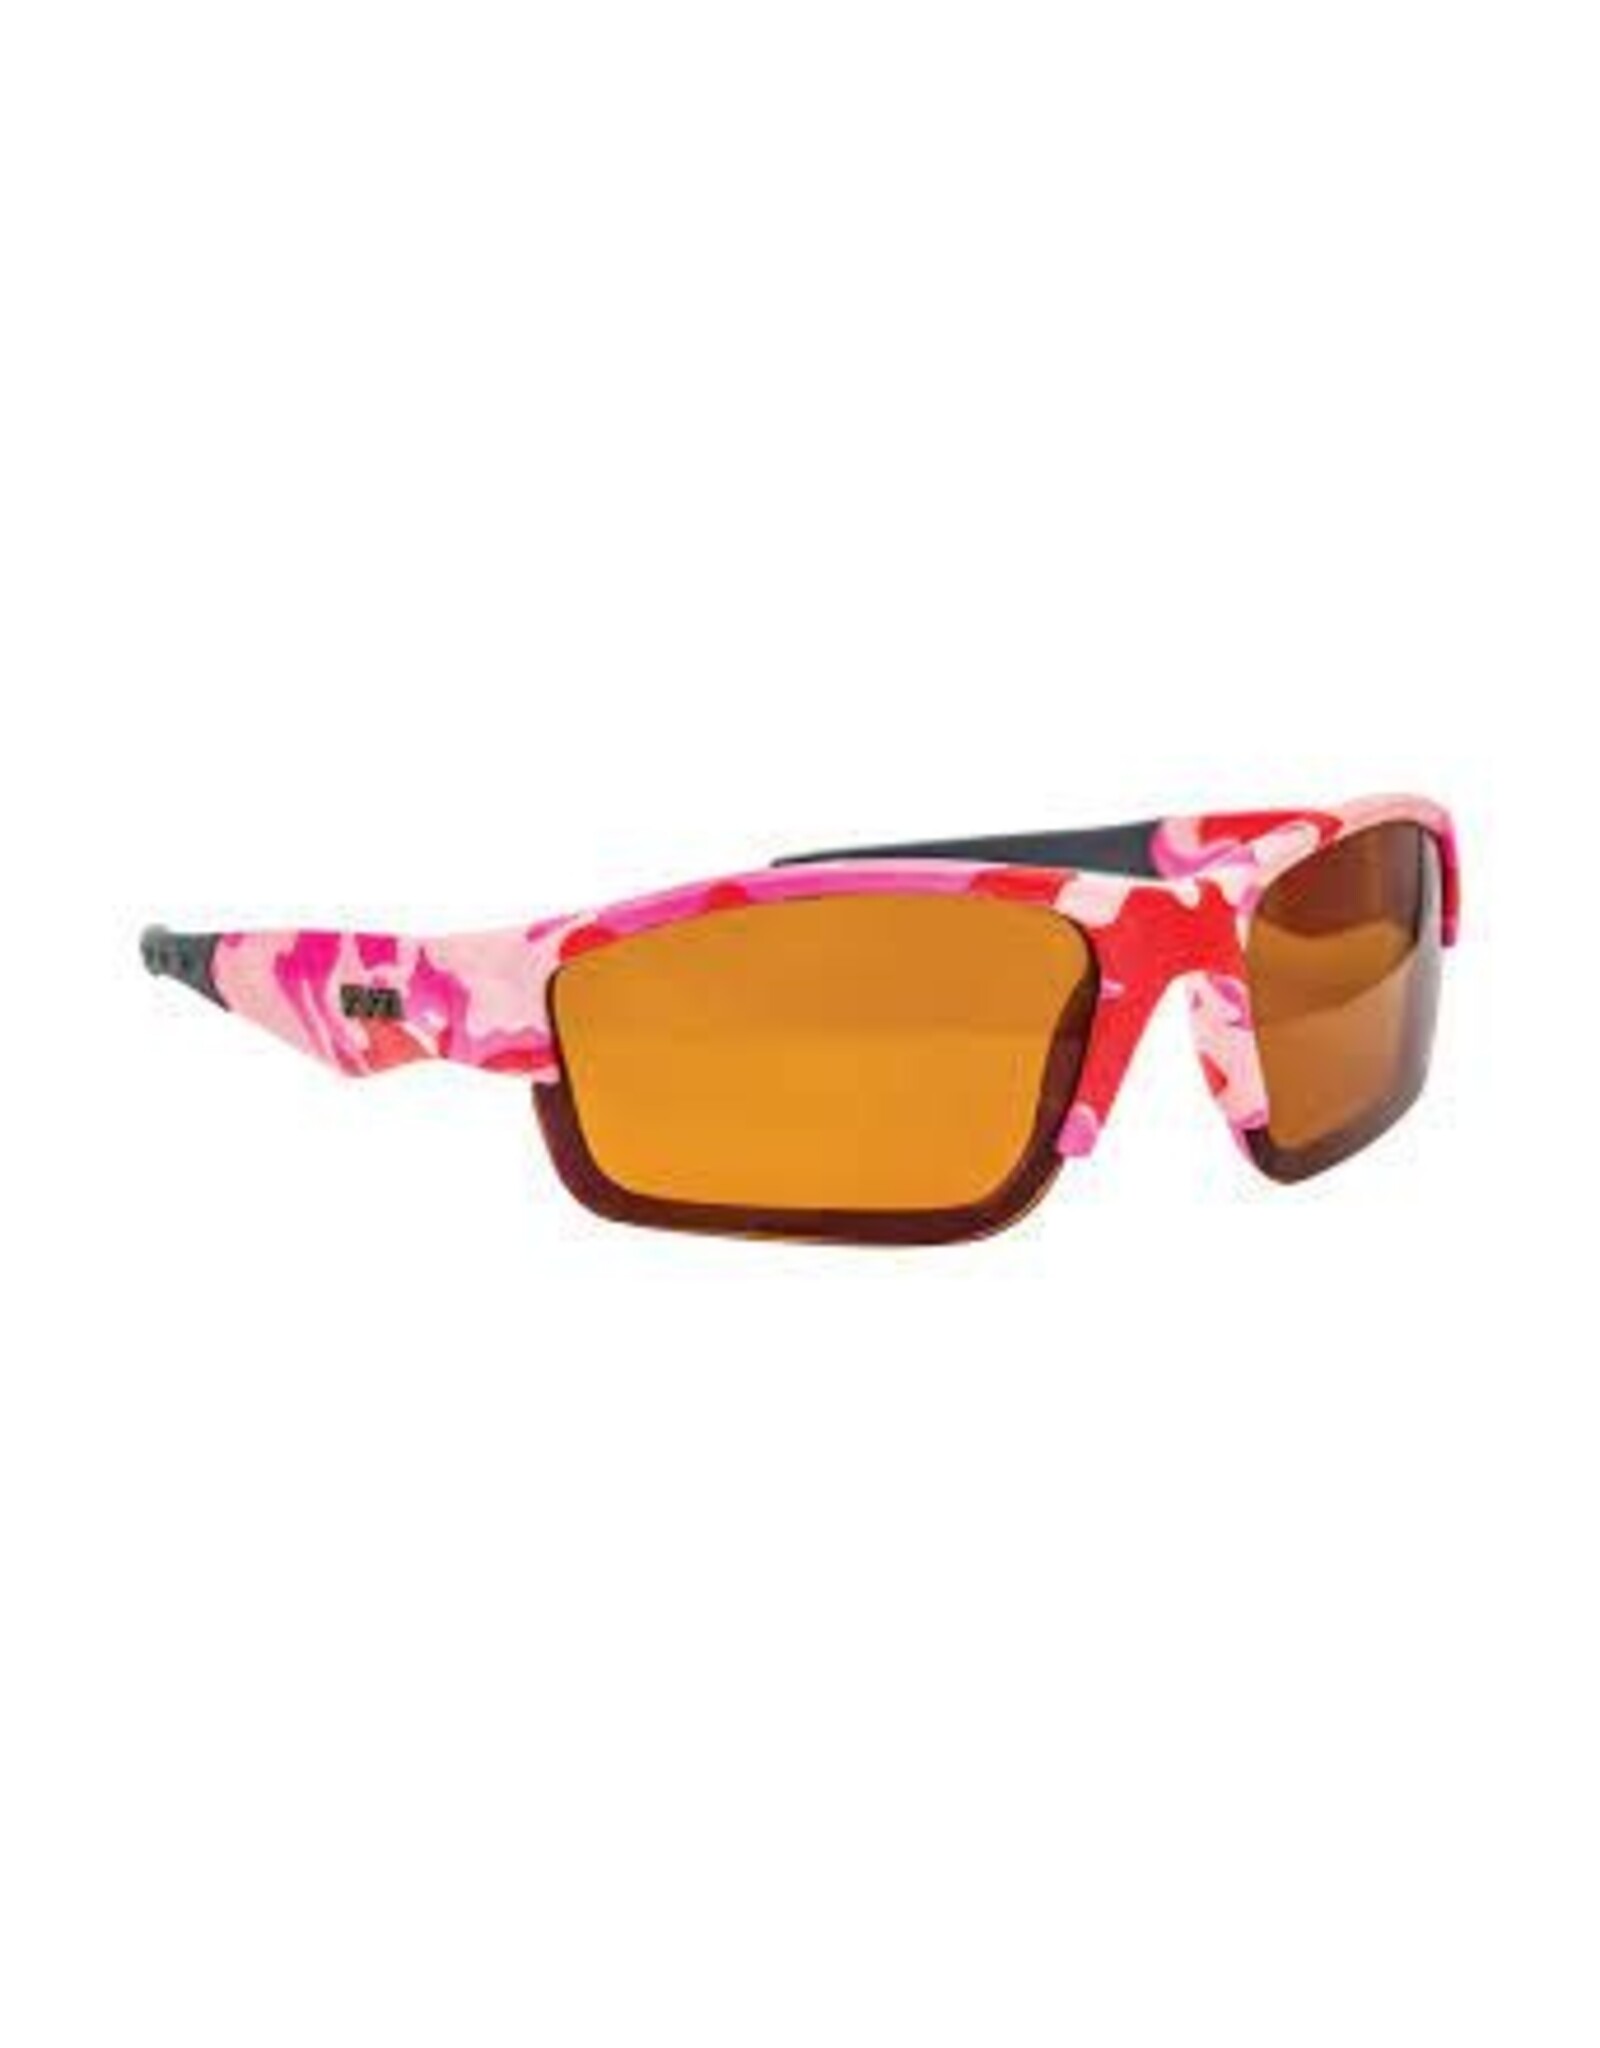 Rapala Rapala Kids Sunglasses Pink Camo